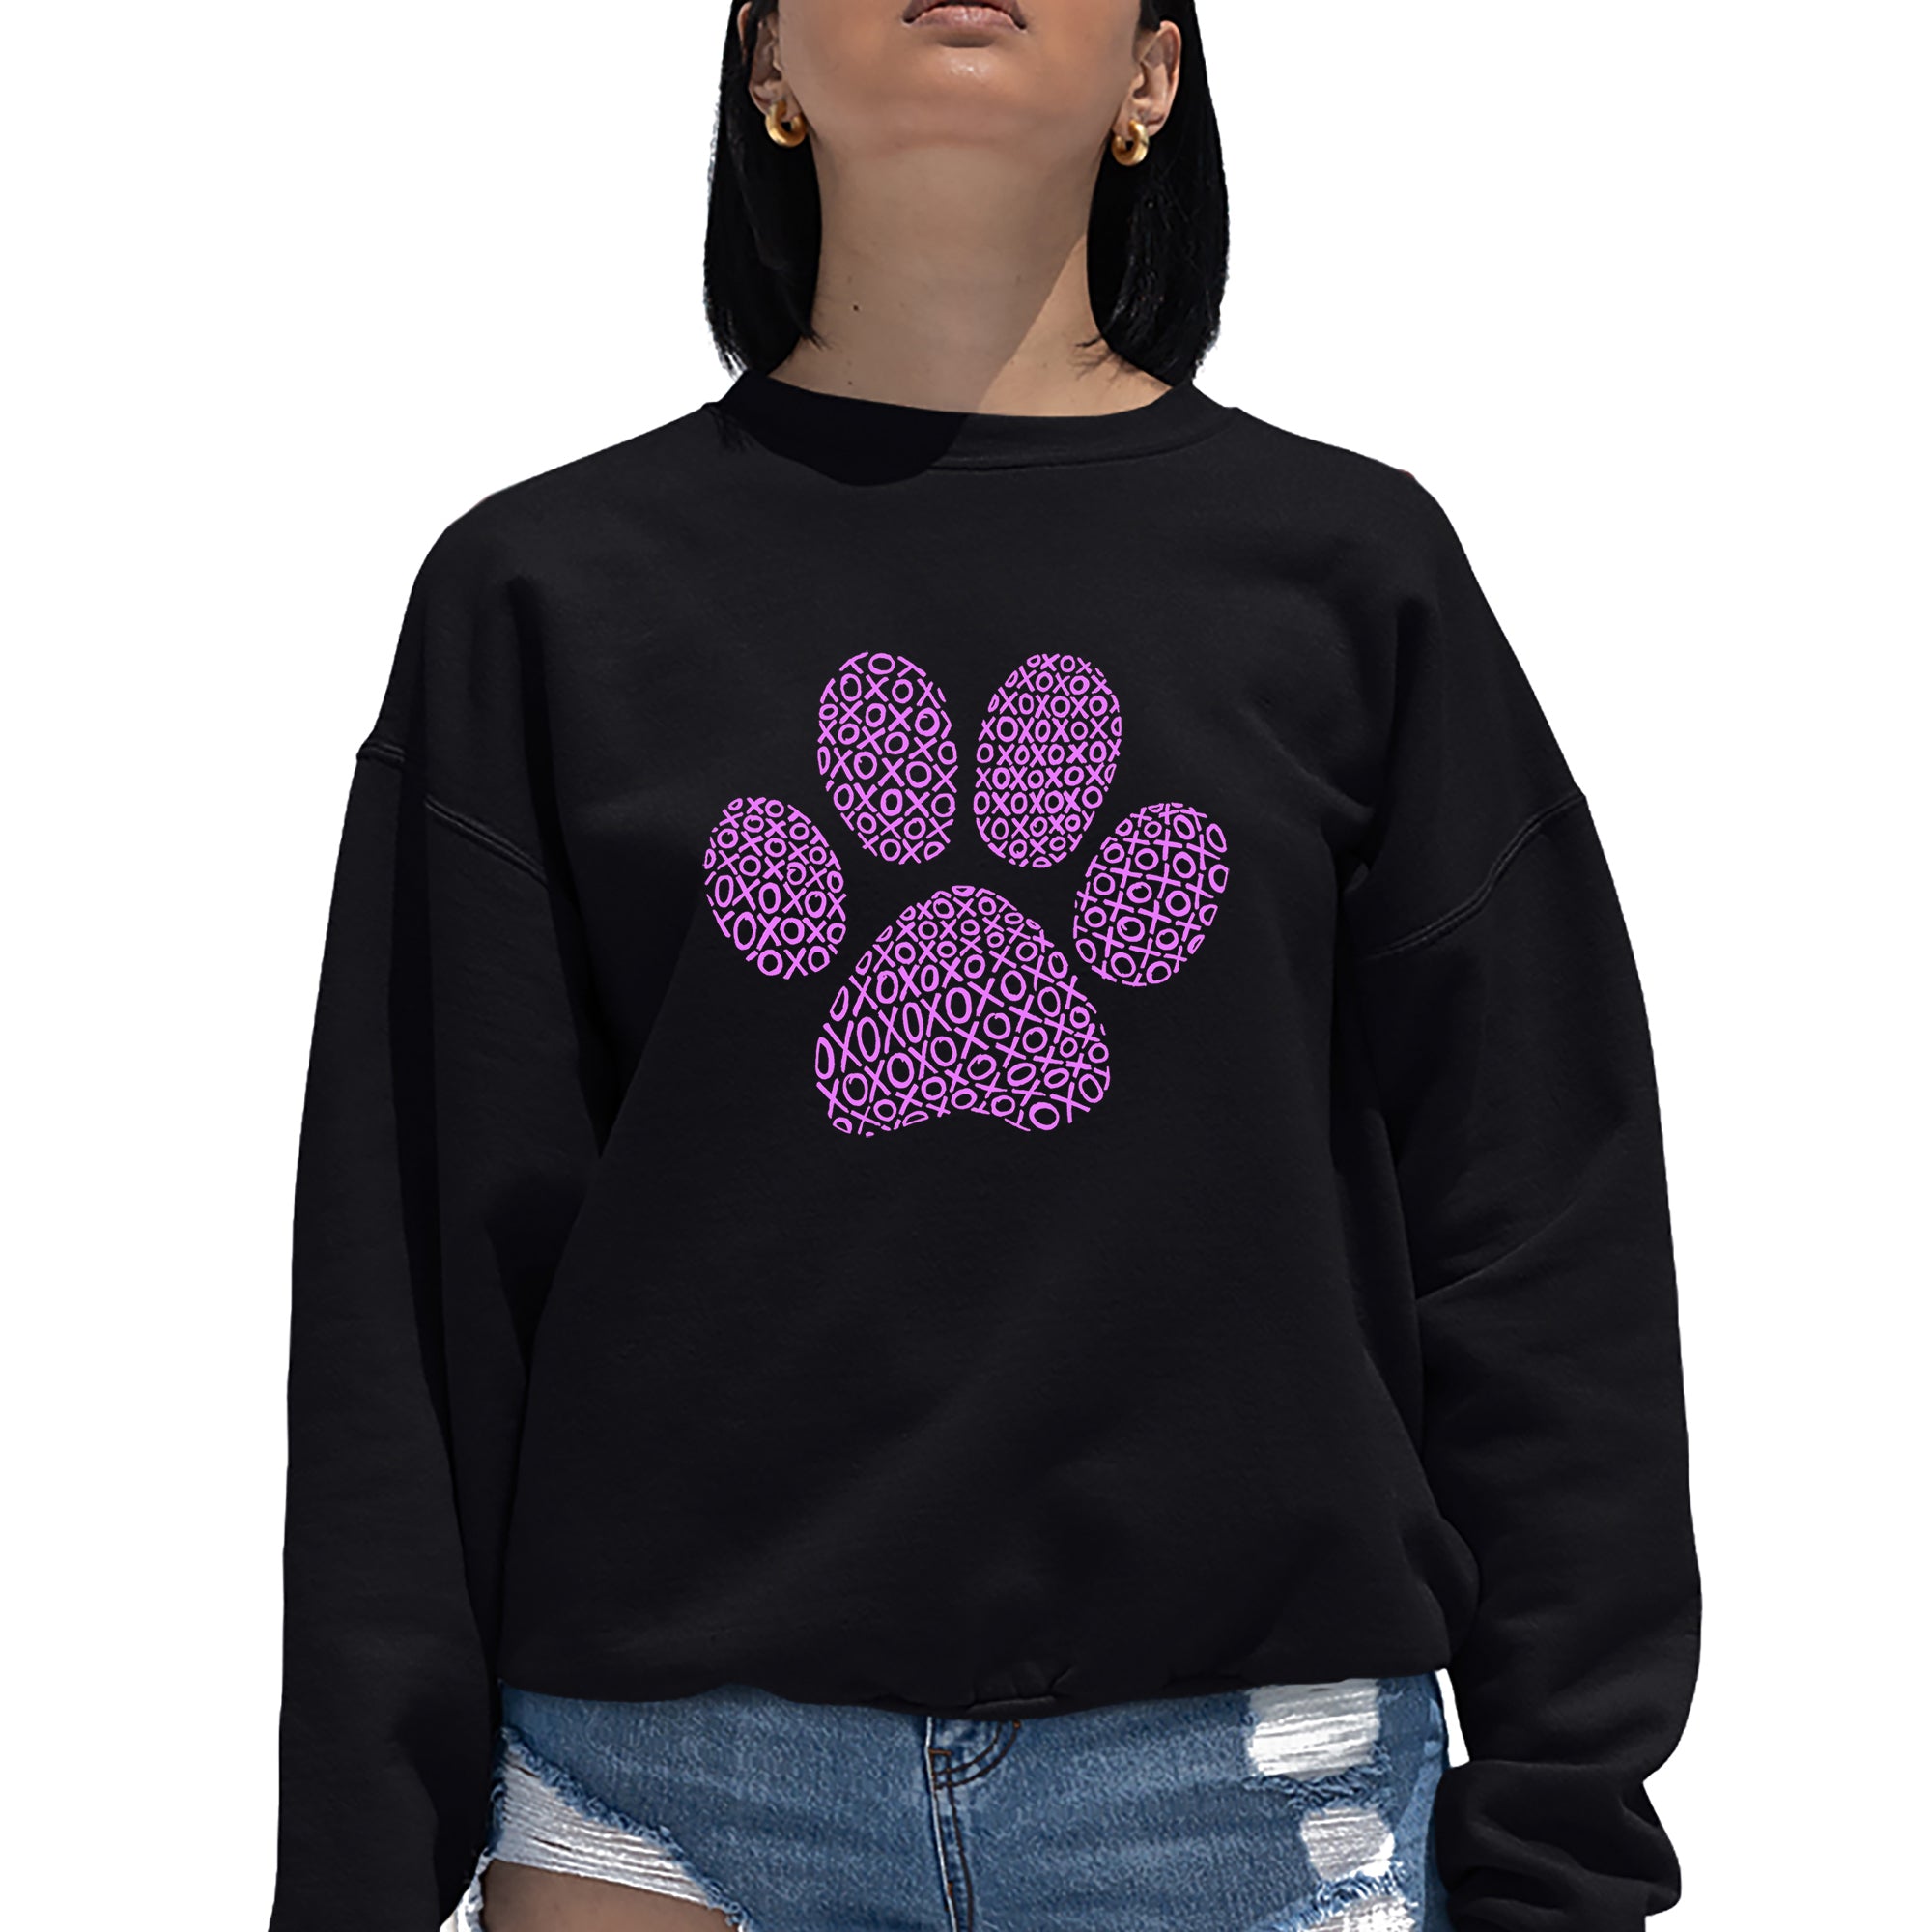 XOXO Dog Paw - Women's Word Art Crewneck Sweatshirt - Black - Medium